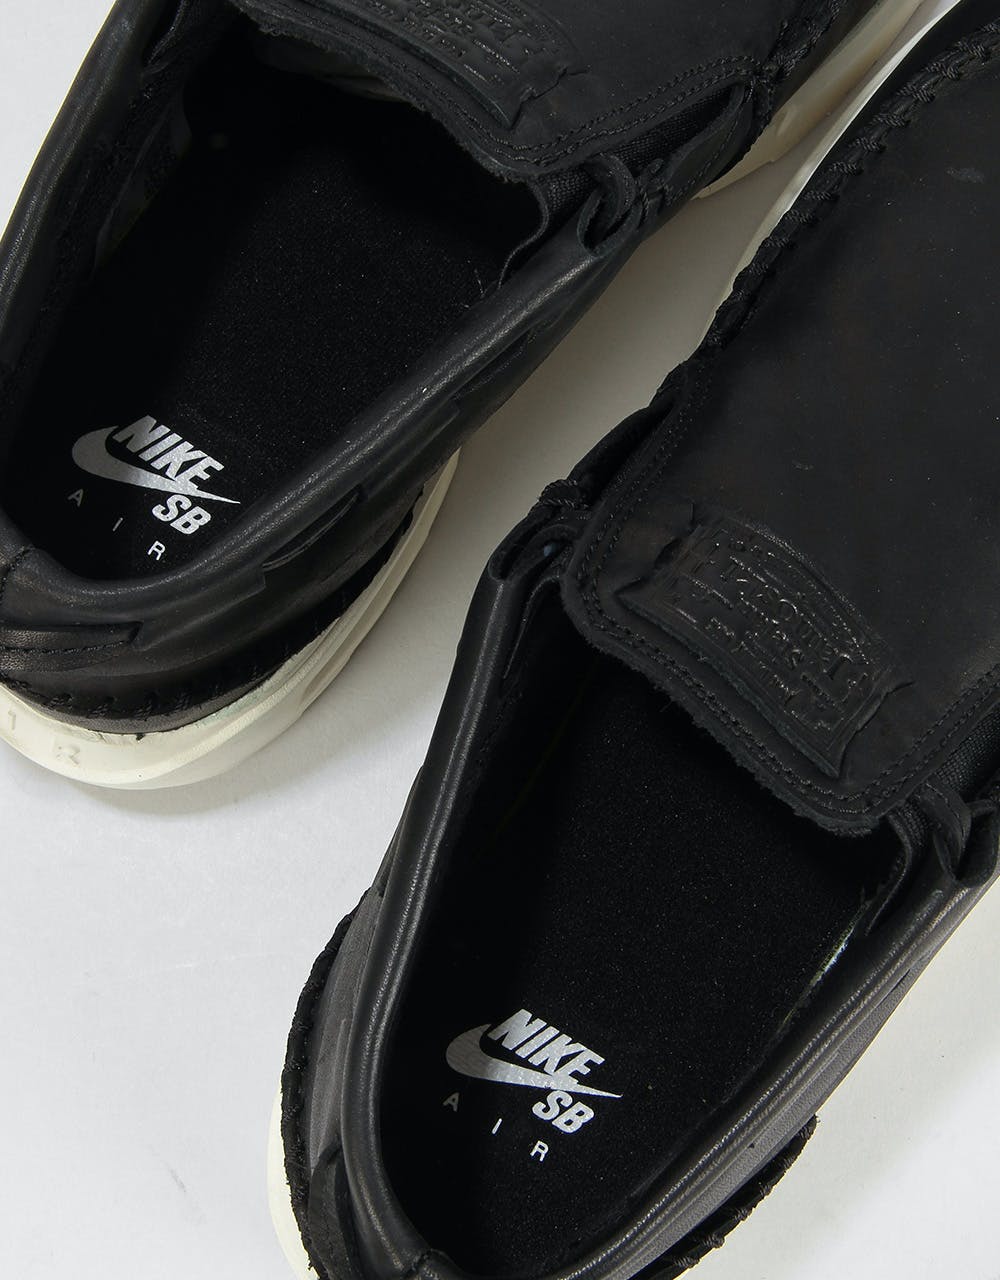 Nike SB Air Max Stefan Janoski 2 Moc Skate Shoes - Black/Pale Ivory